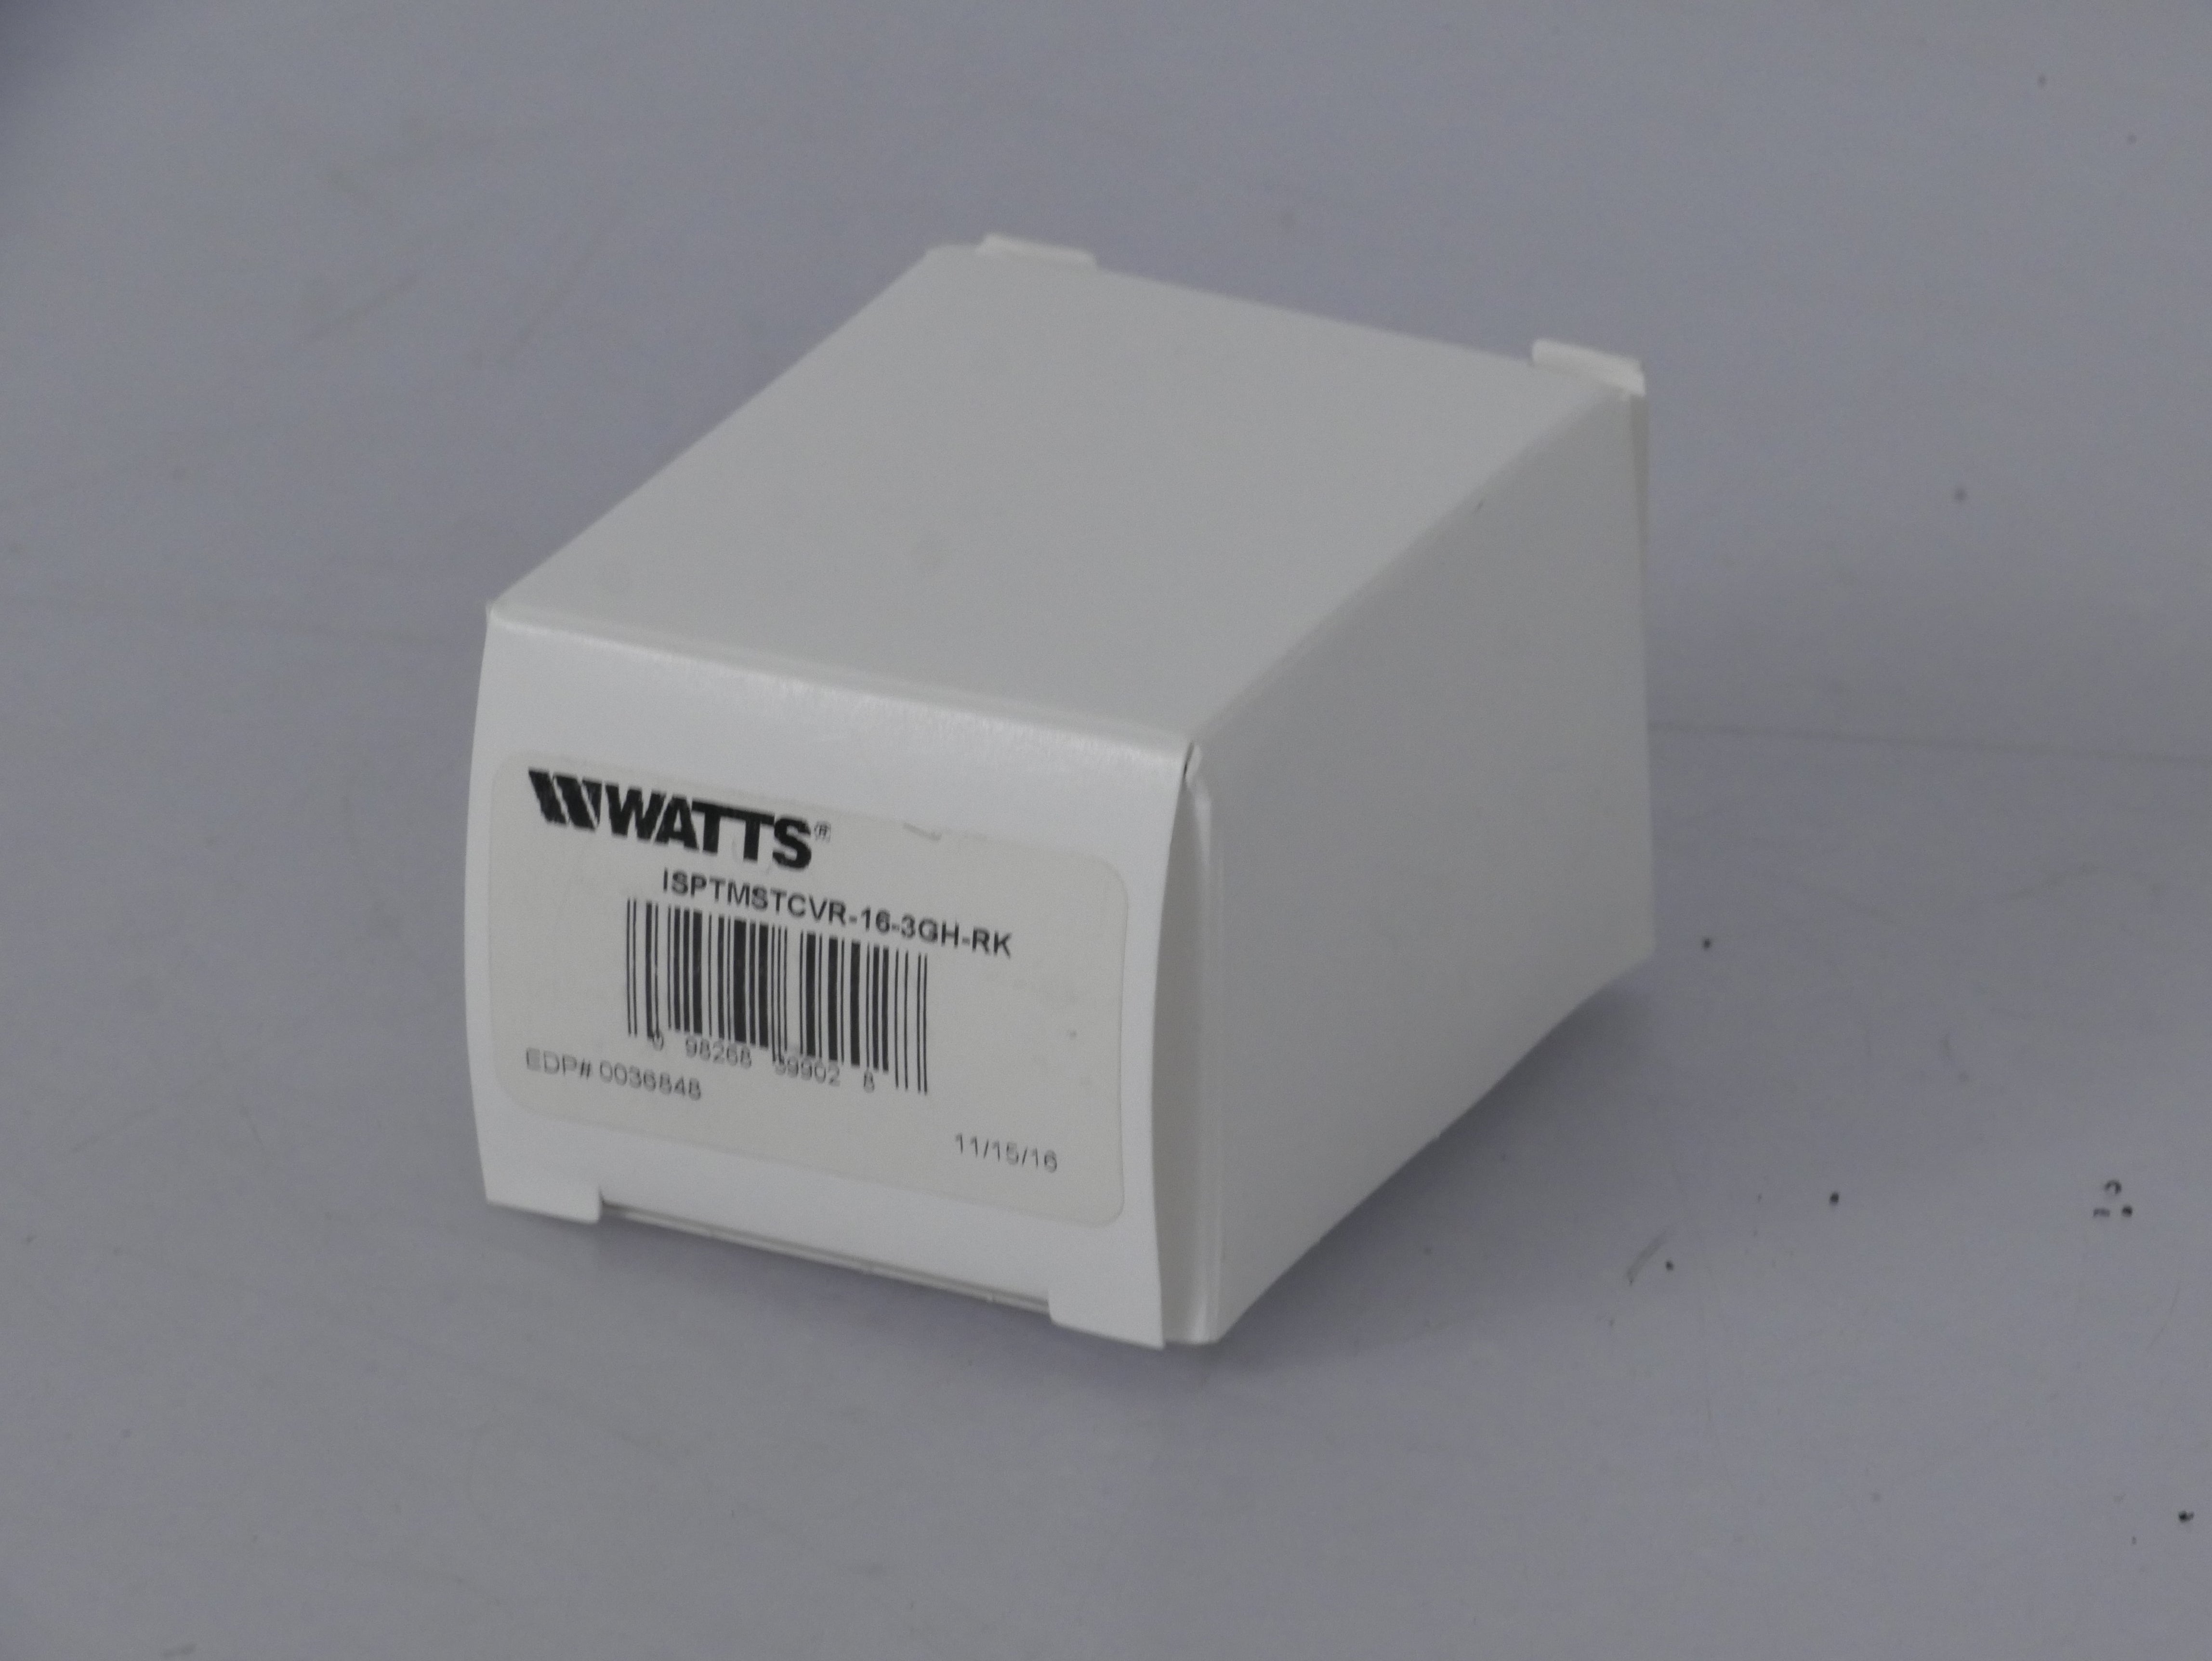 Watts Thermostatic Radiator Steam Trap Repair Kit 0036848